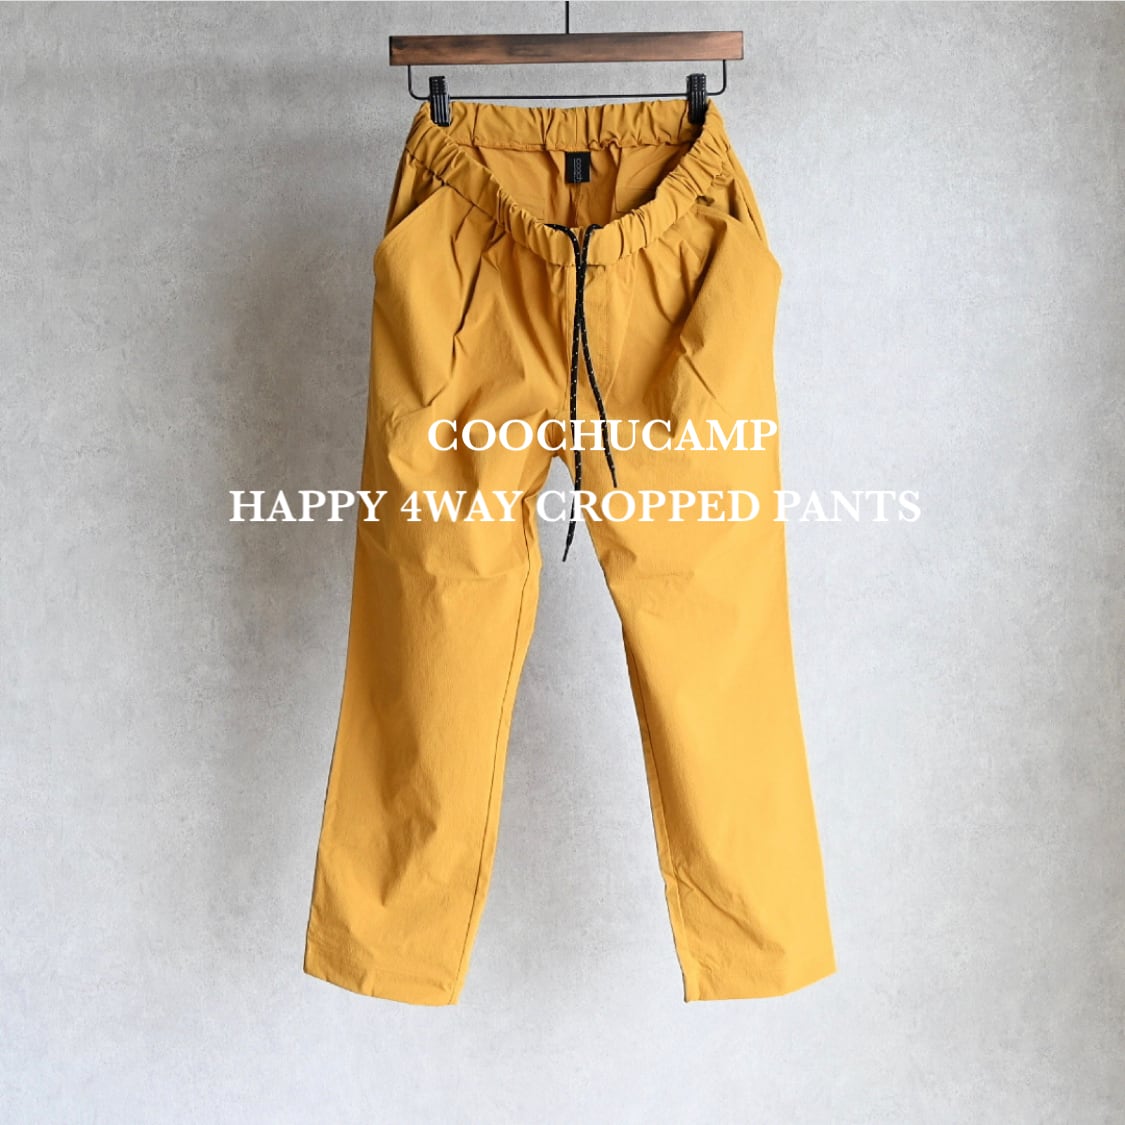 COOCHUCAMP Happy 4way cropped pants